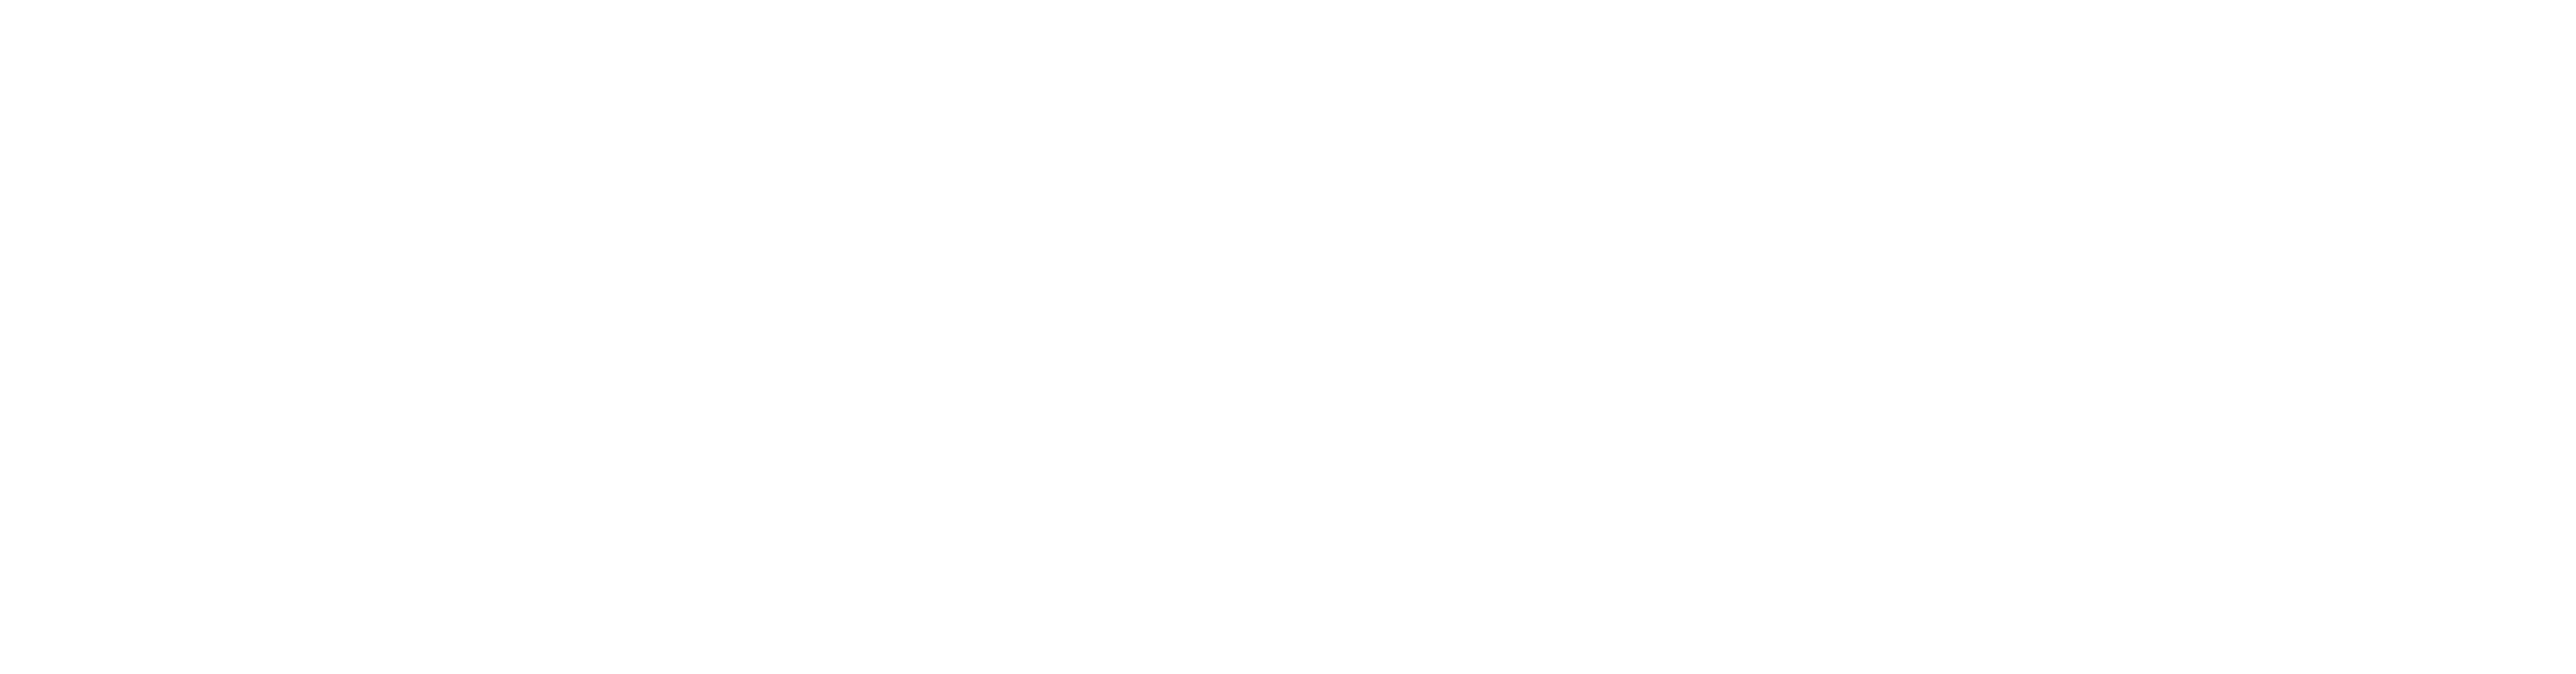 BetterChecked Logo